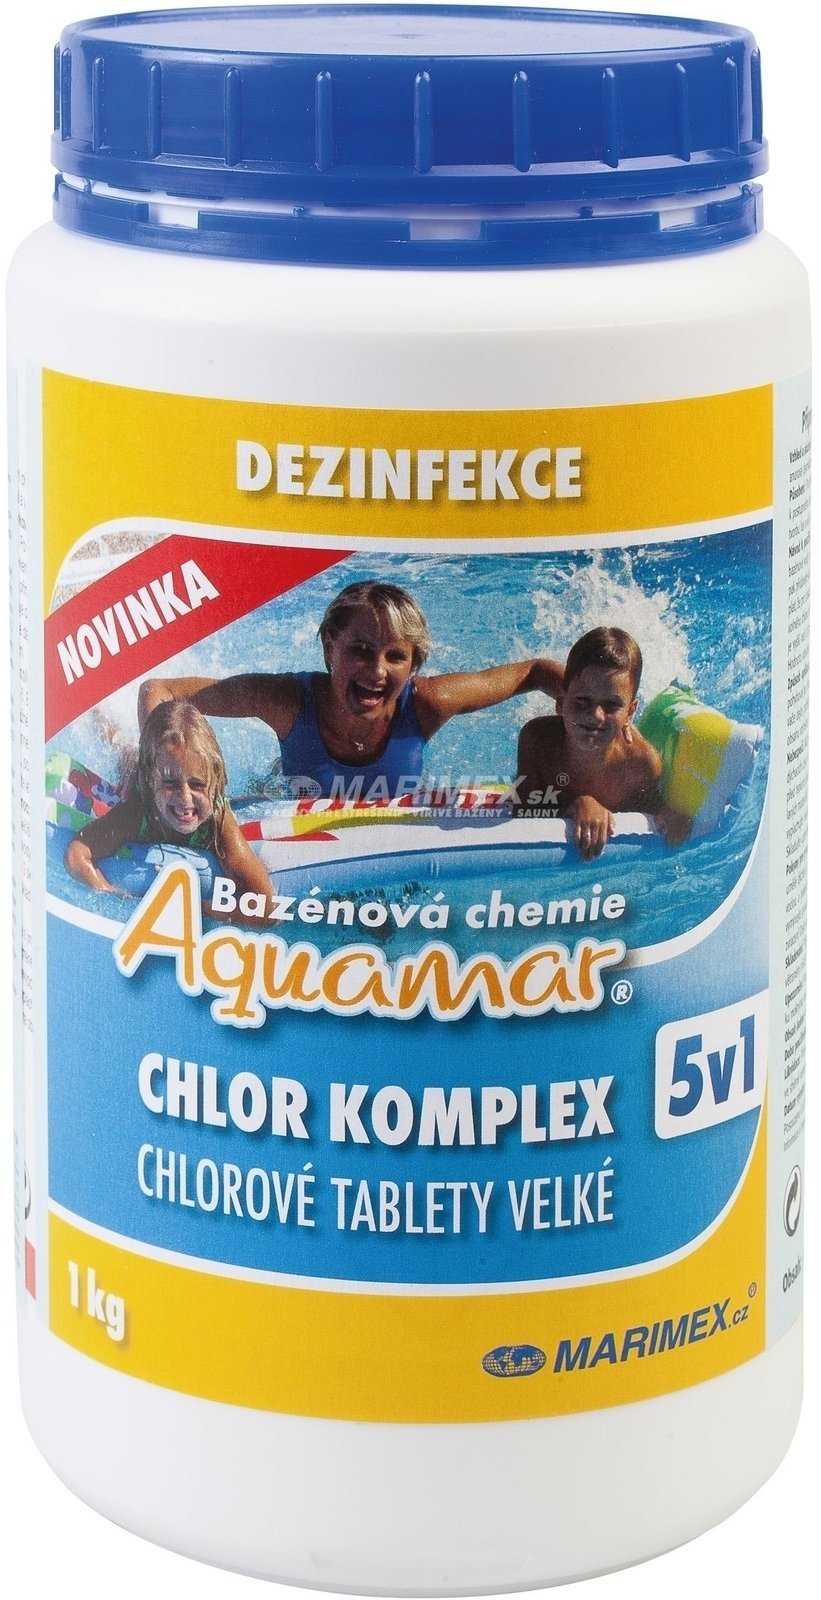 Productos químicos para piscinas Marimex AQuaMar Komplex 5v1 1.0 kg